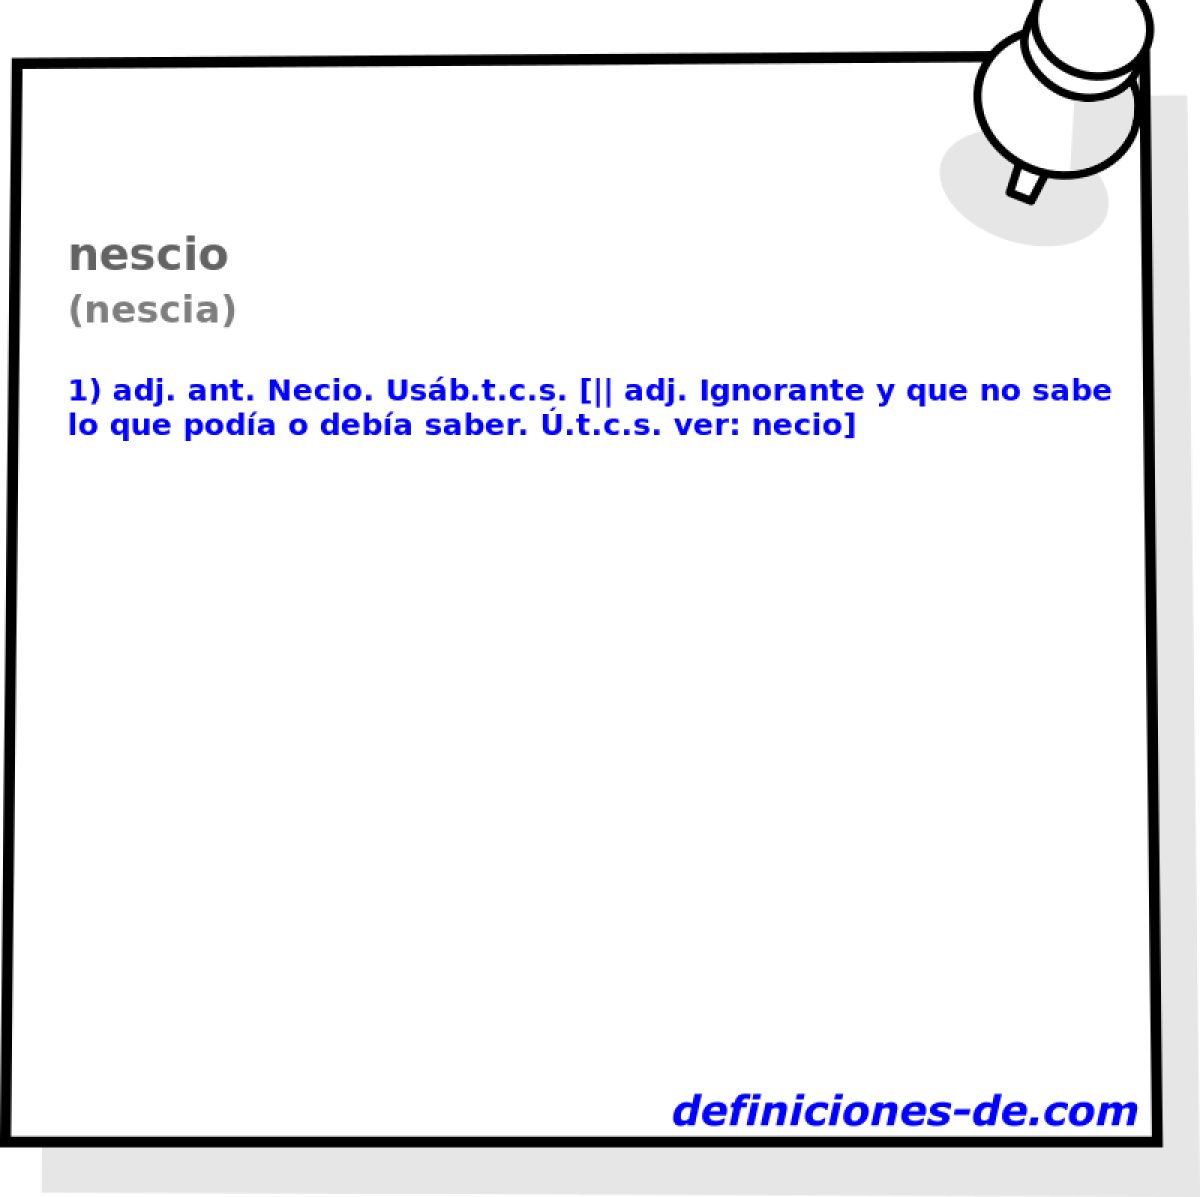 nescio (nescia)